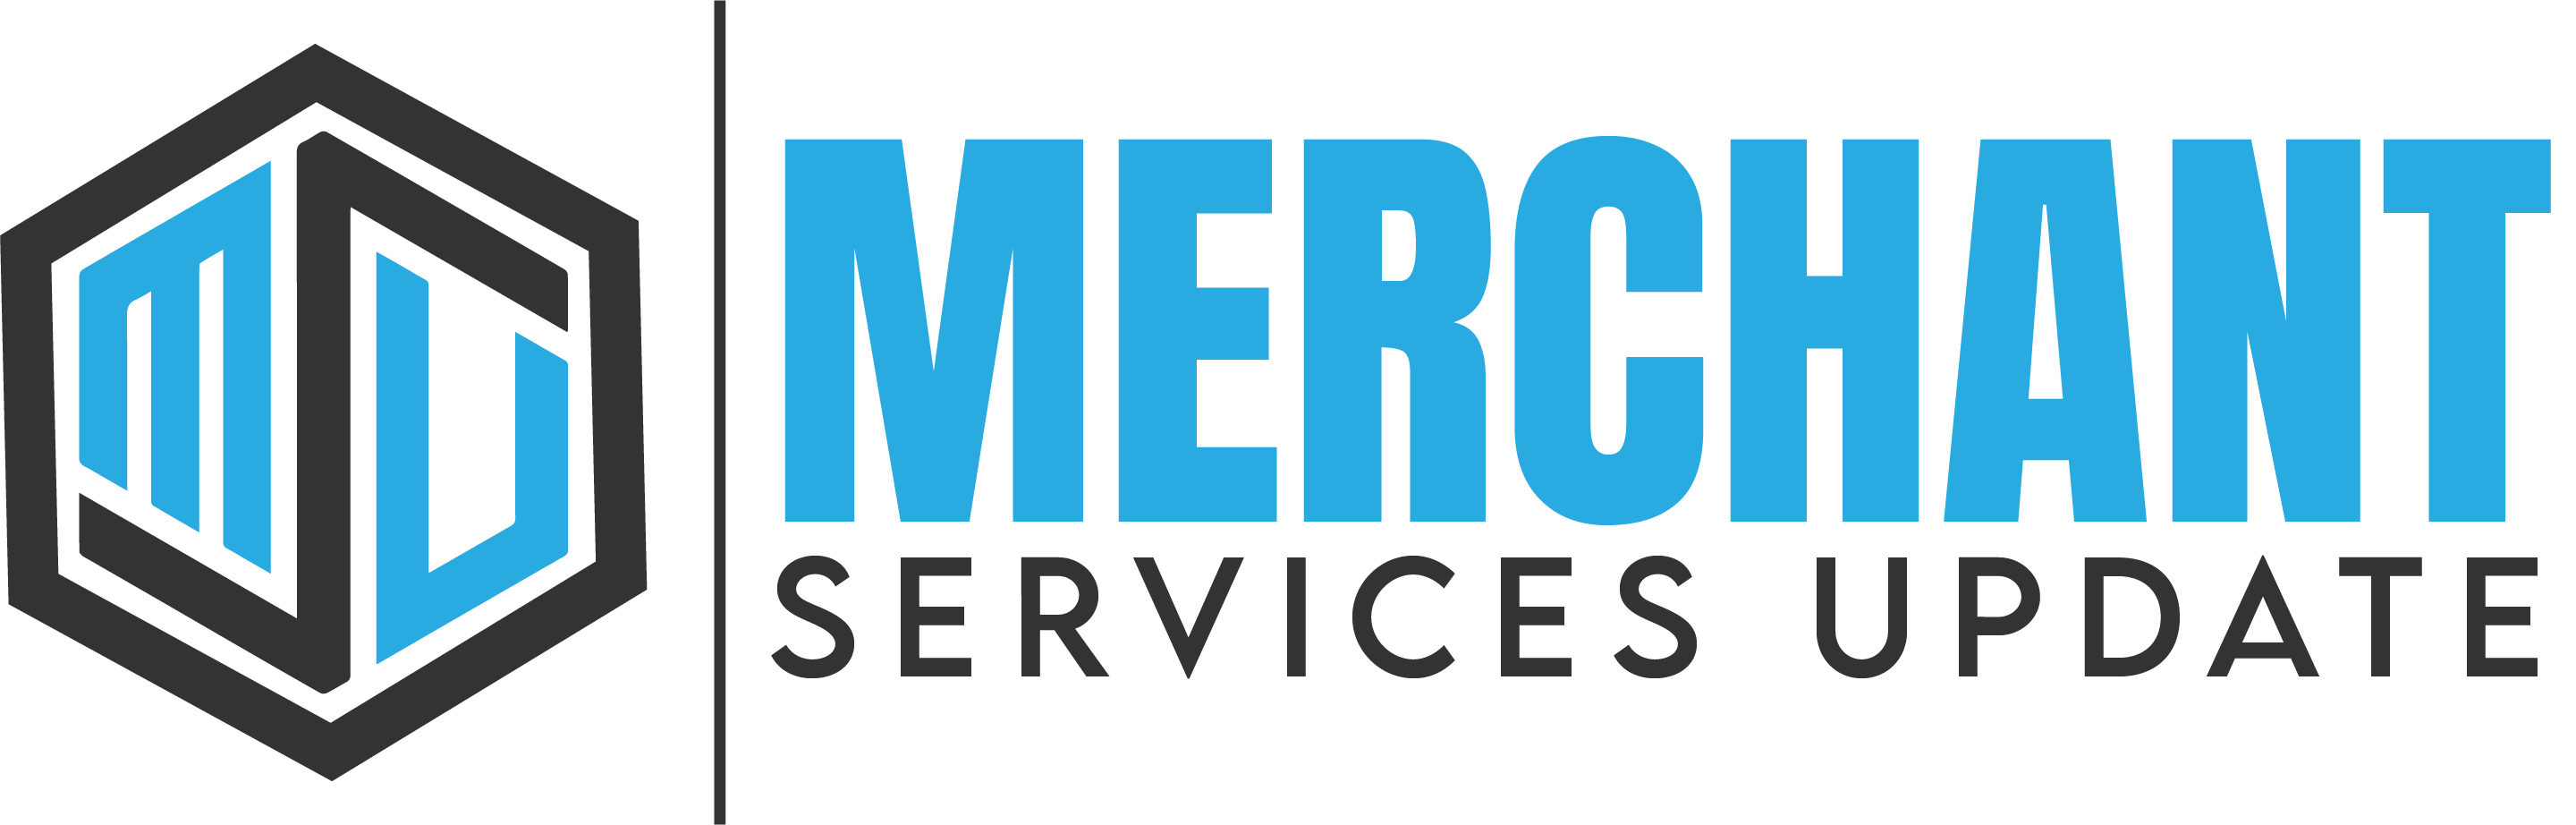 Merchant Services Update – The Latest Merchant Account Reviews